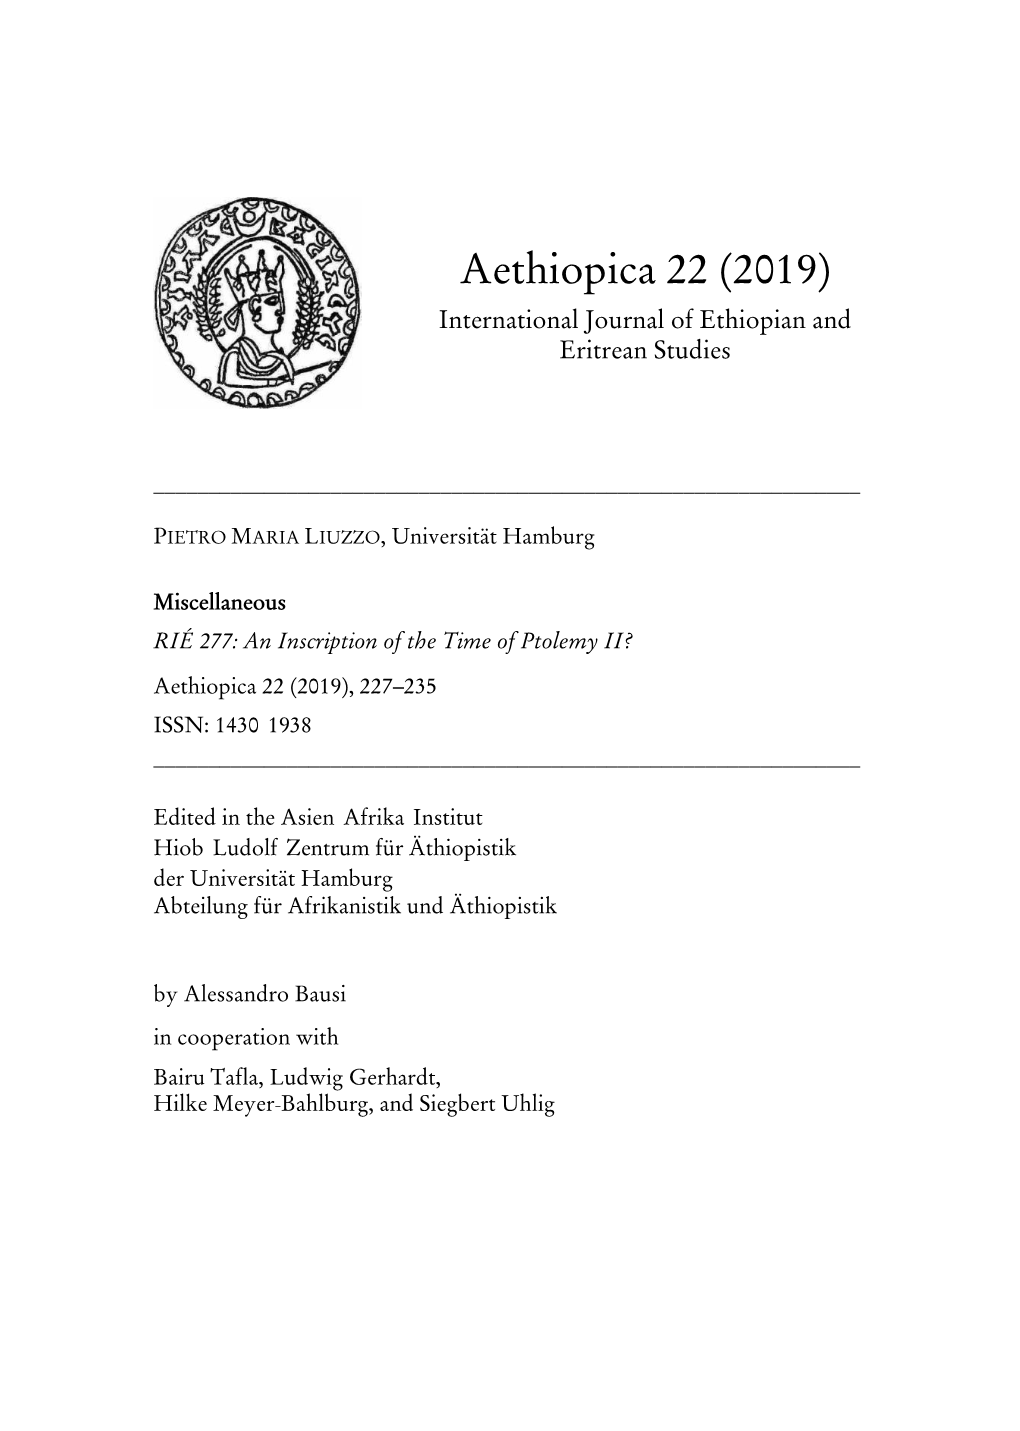 Aethiopica 22 (2019) International Journal of Ethiopian and Eritrean Studies